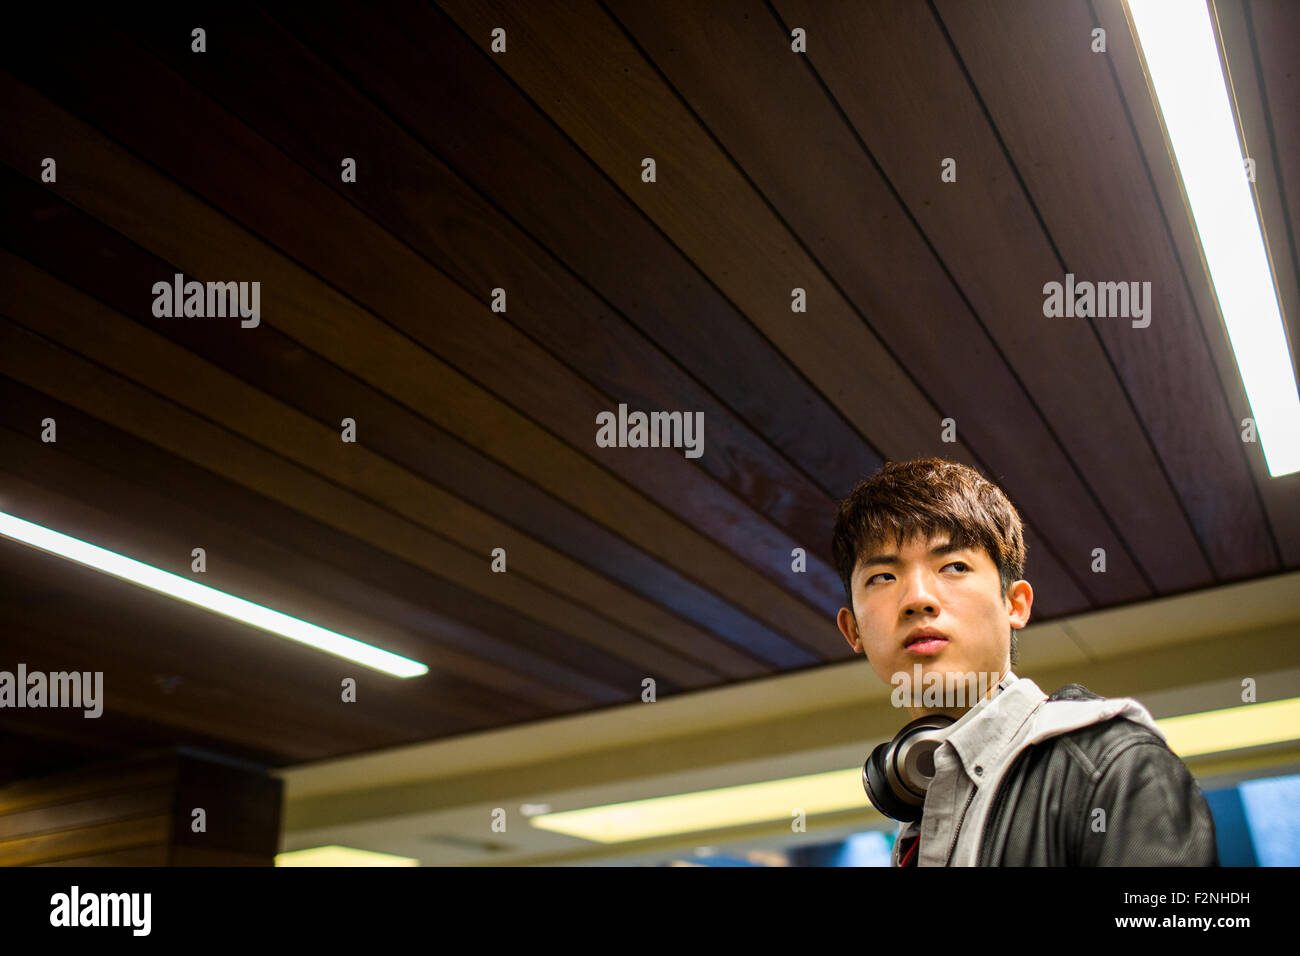 Asian man walking under wooden ceiling Stock Photo